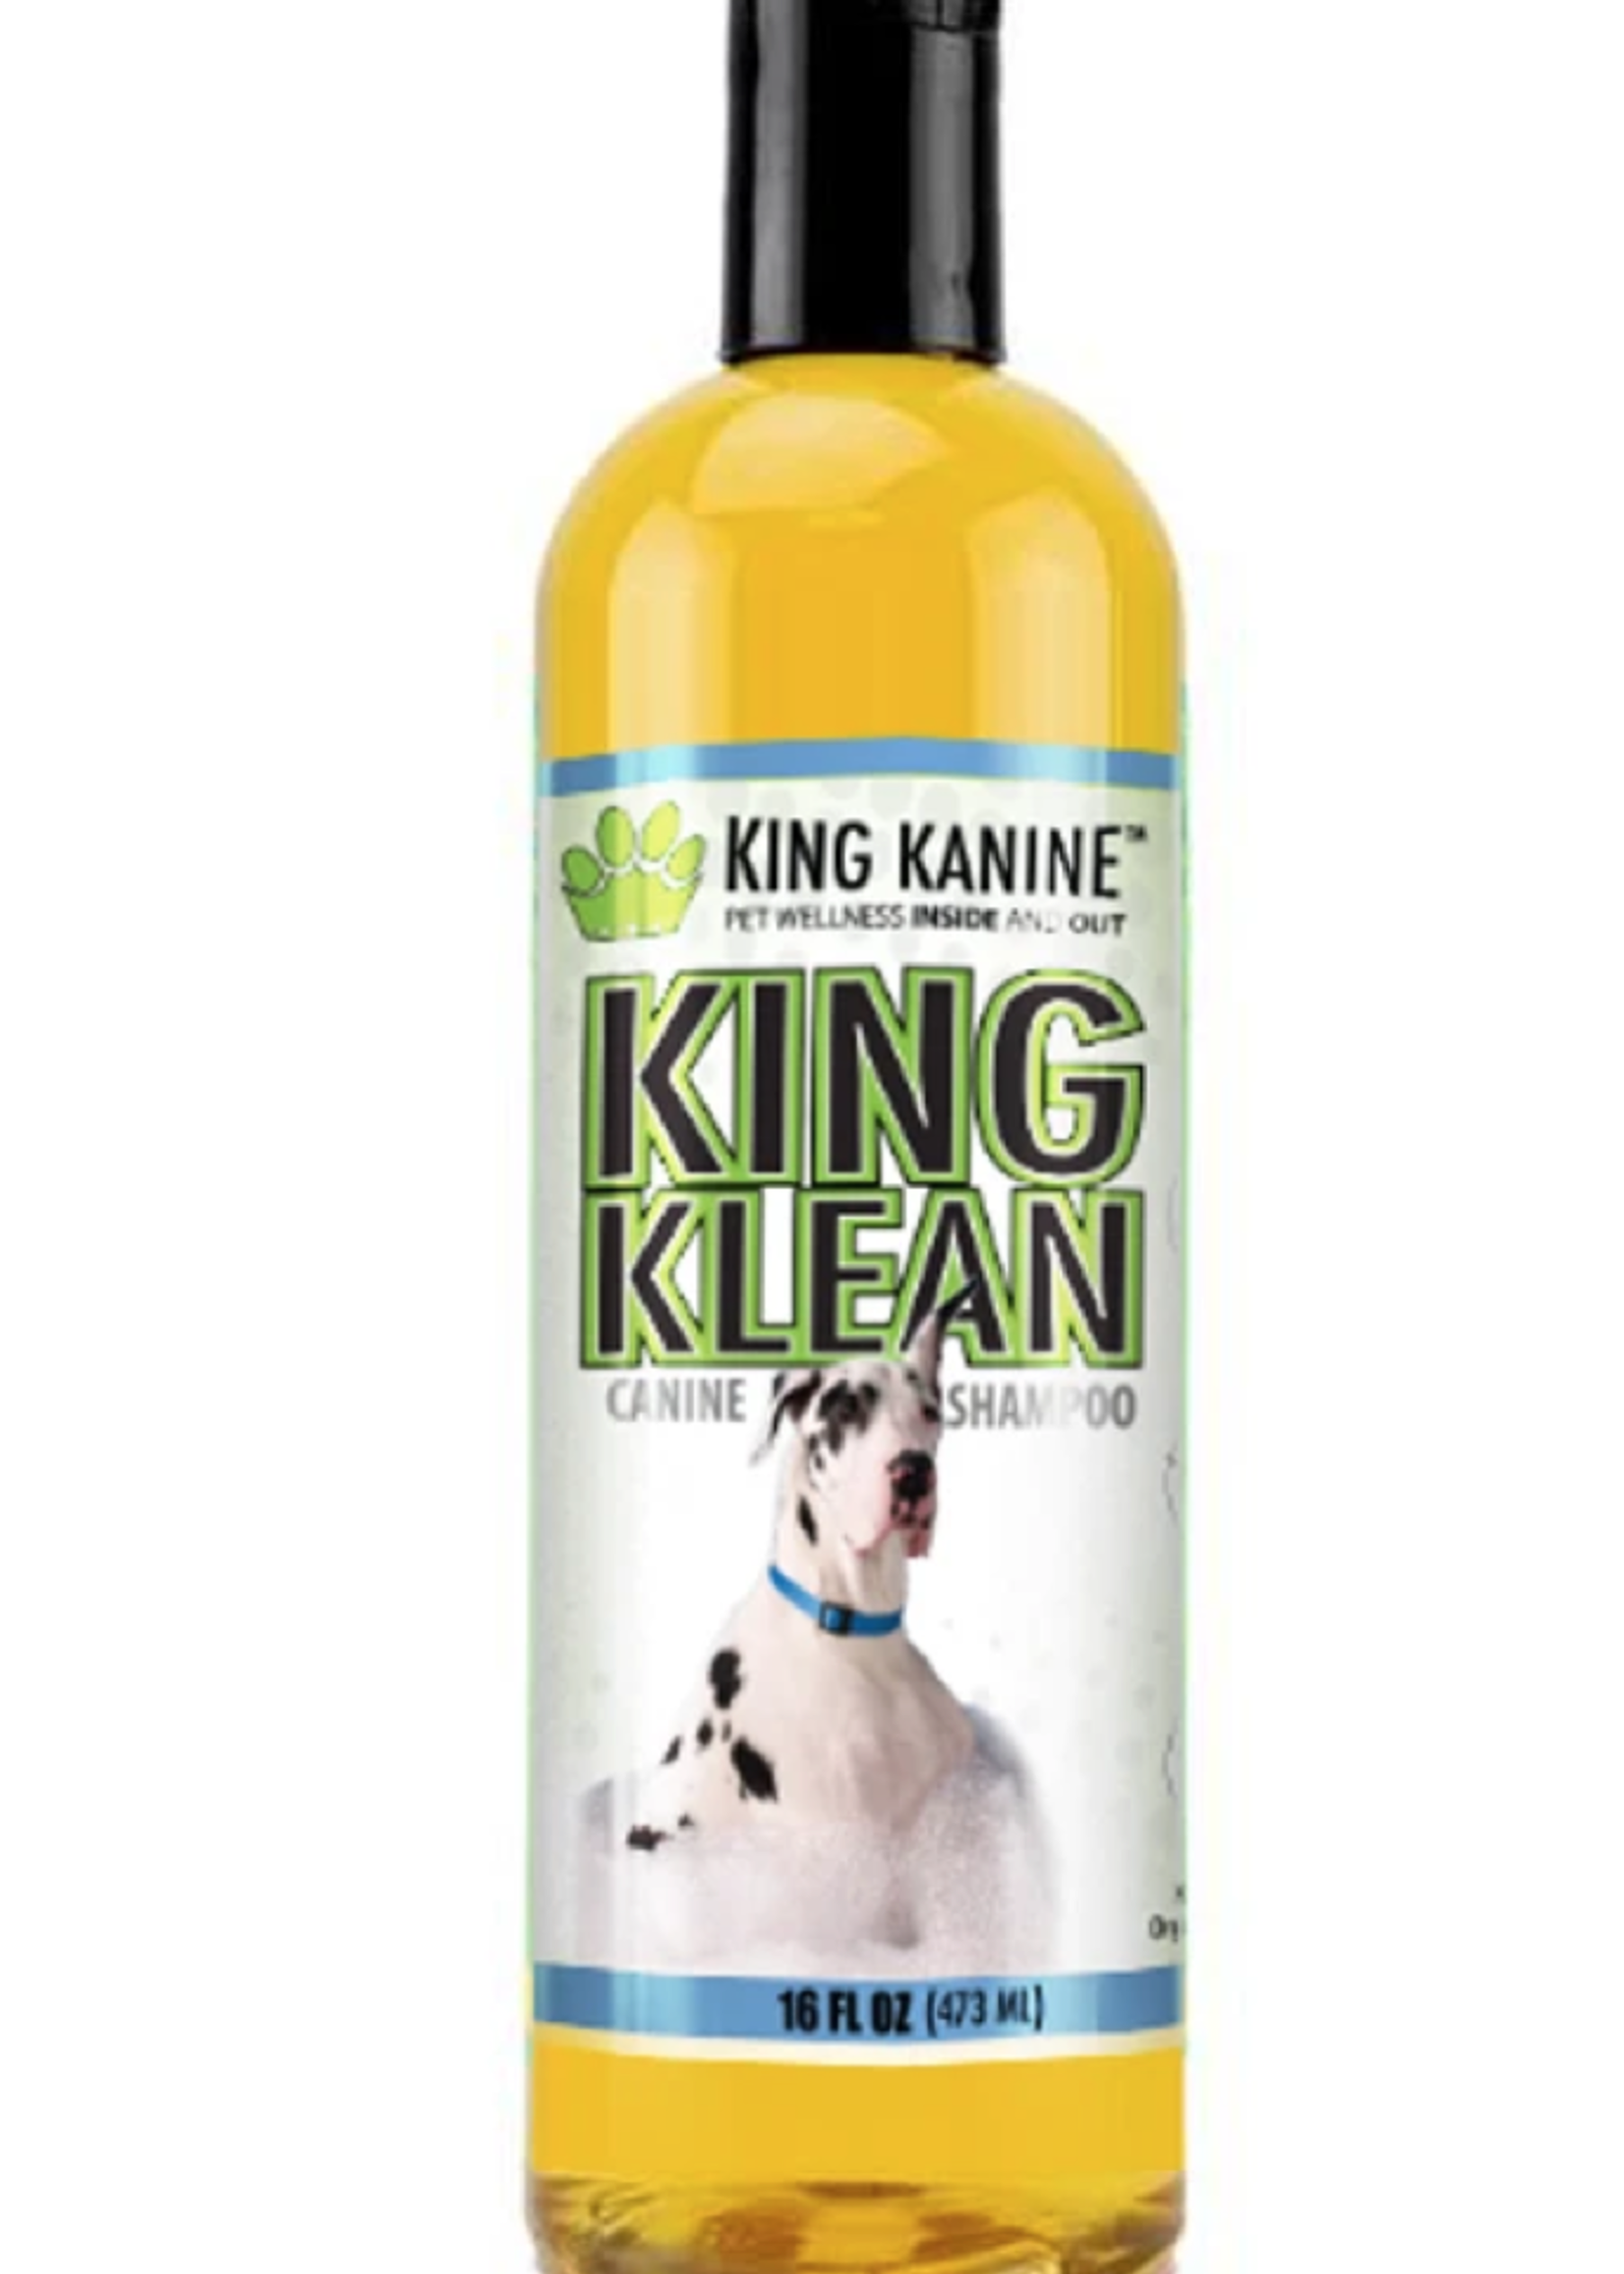 King Kanine King Klean Canine Shampoo